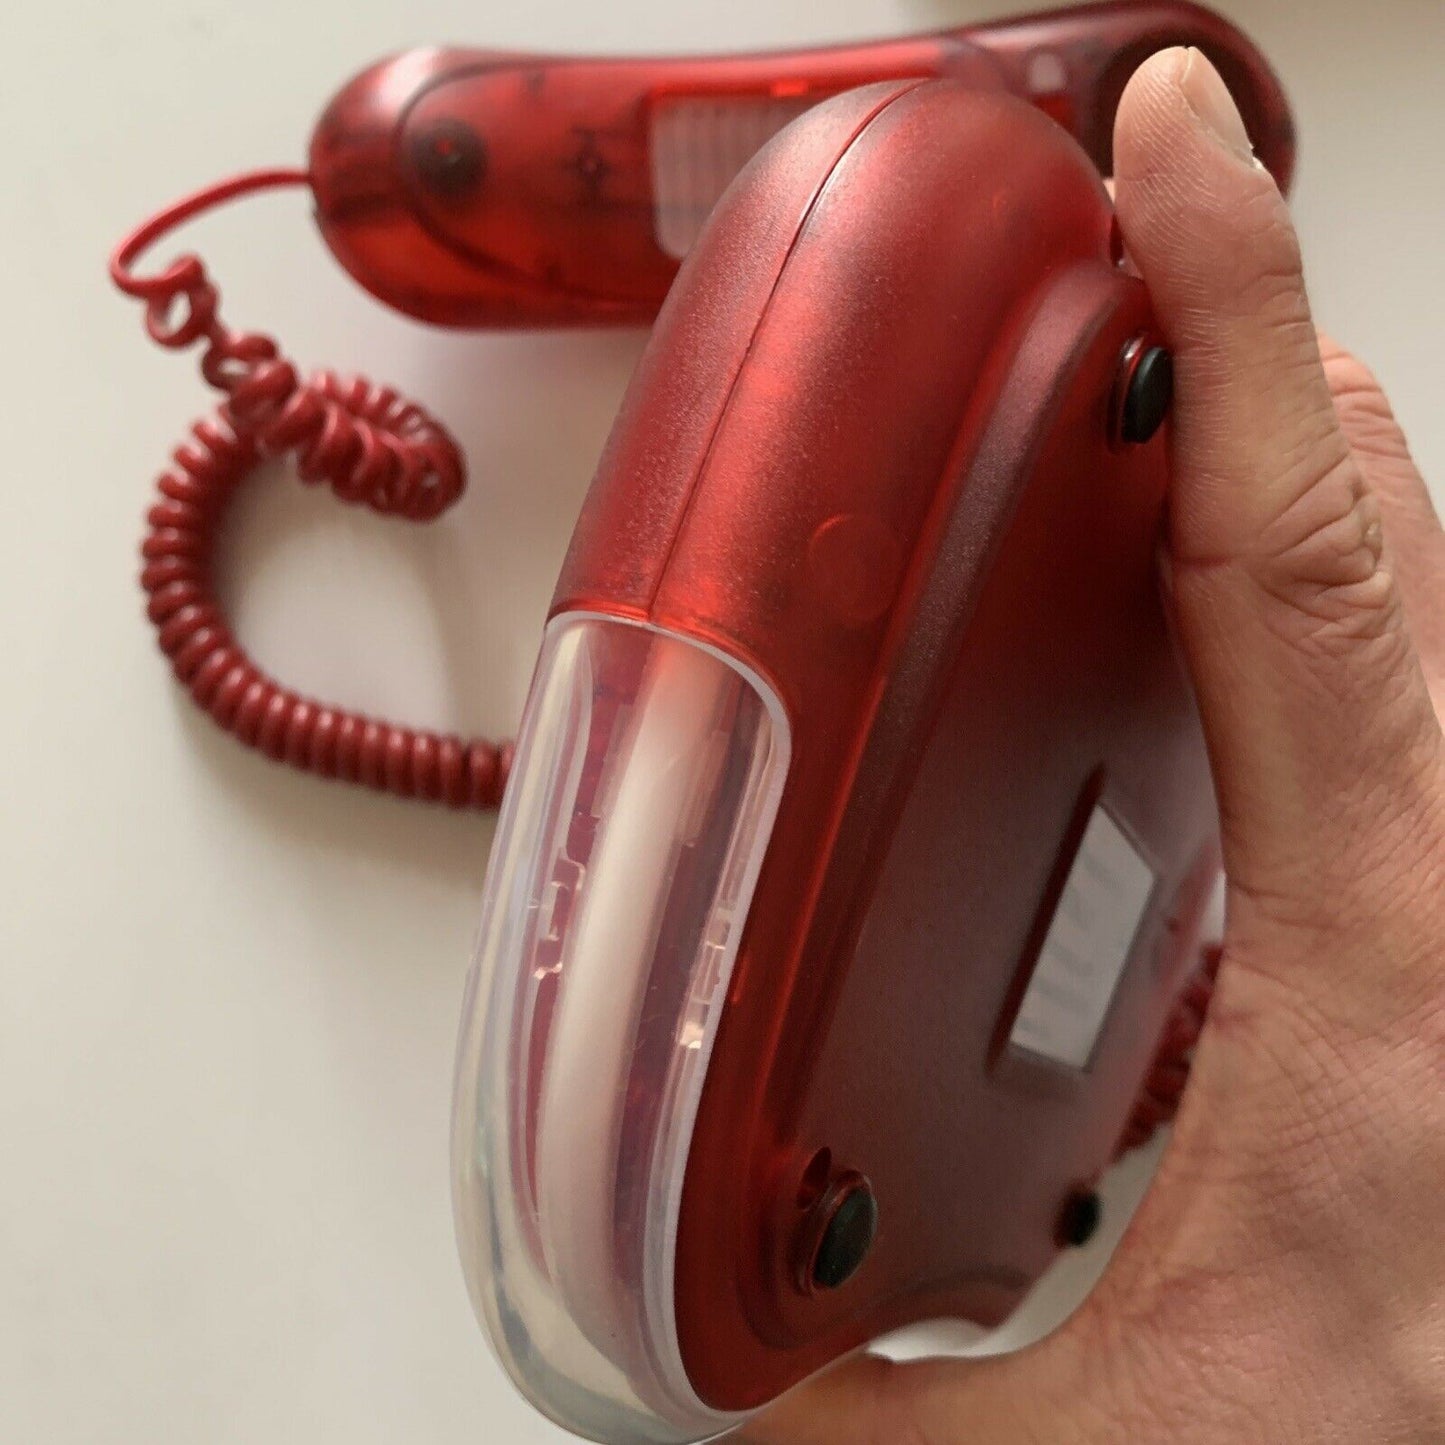 Telstra Slimline 40 Single Landline Phone Red